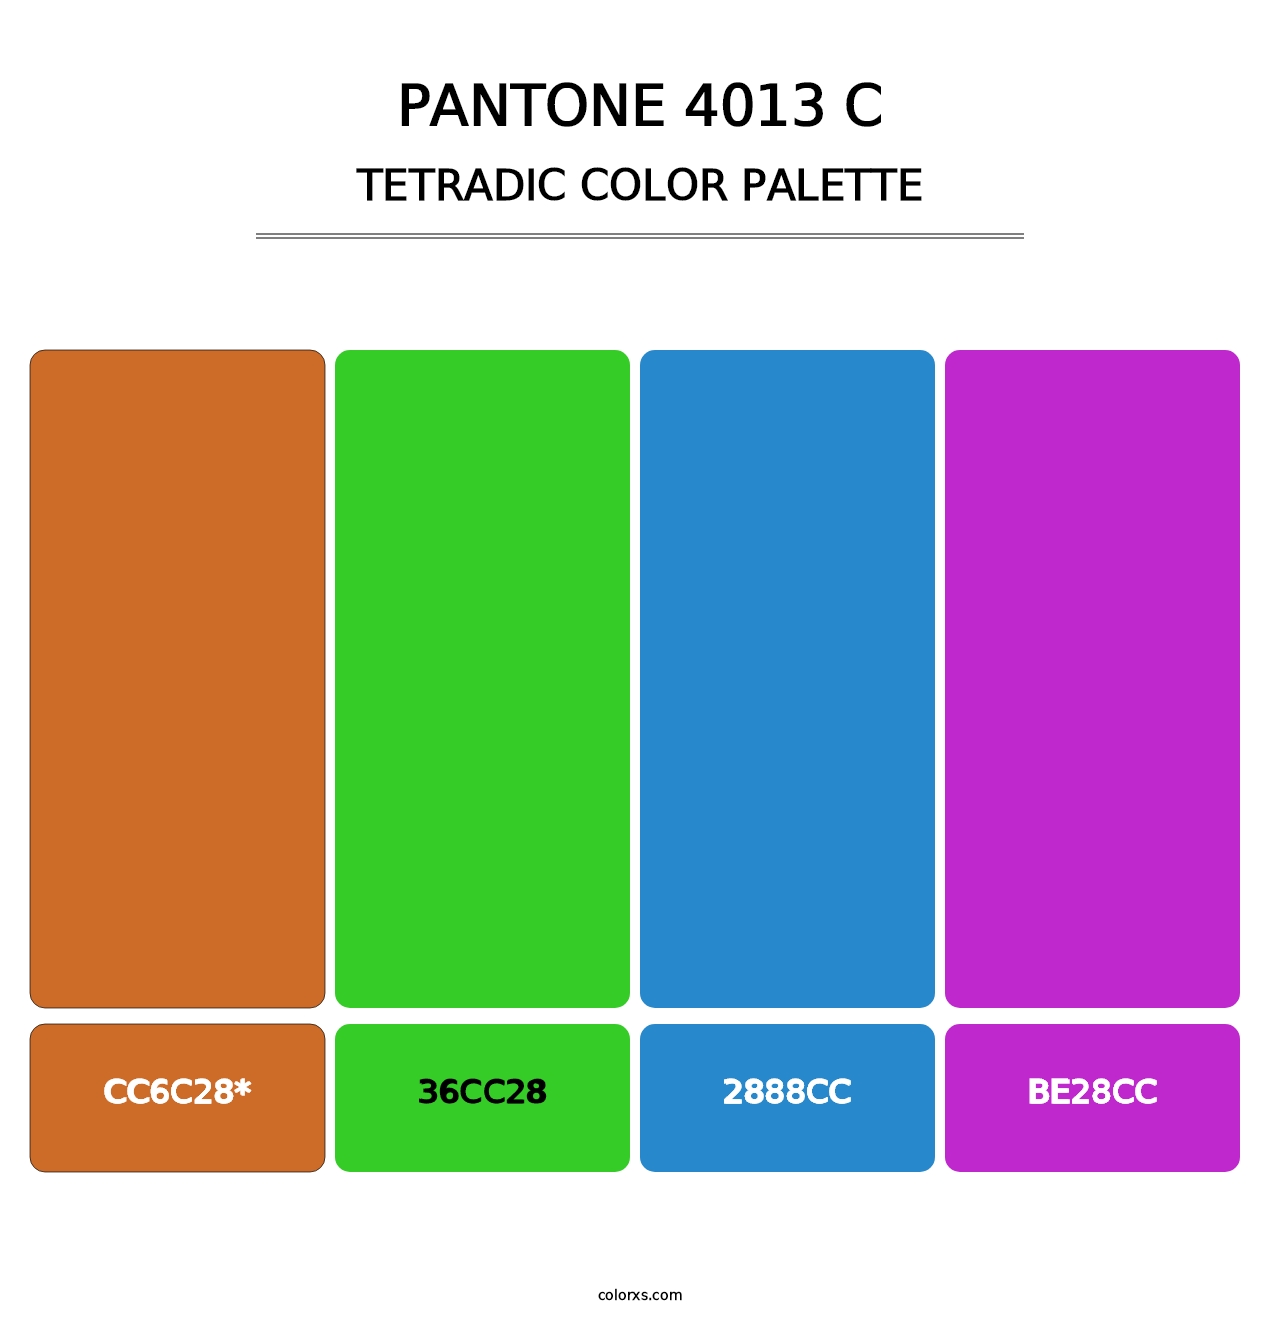 PANTONE 4013 C - Tetradic Color Palette